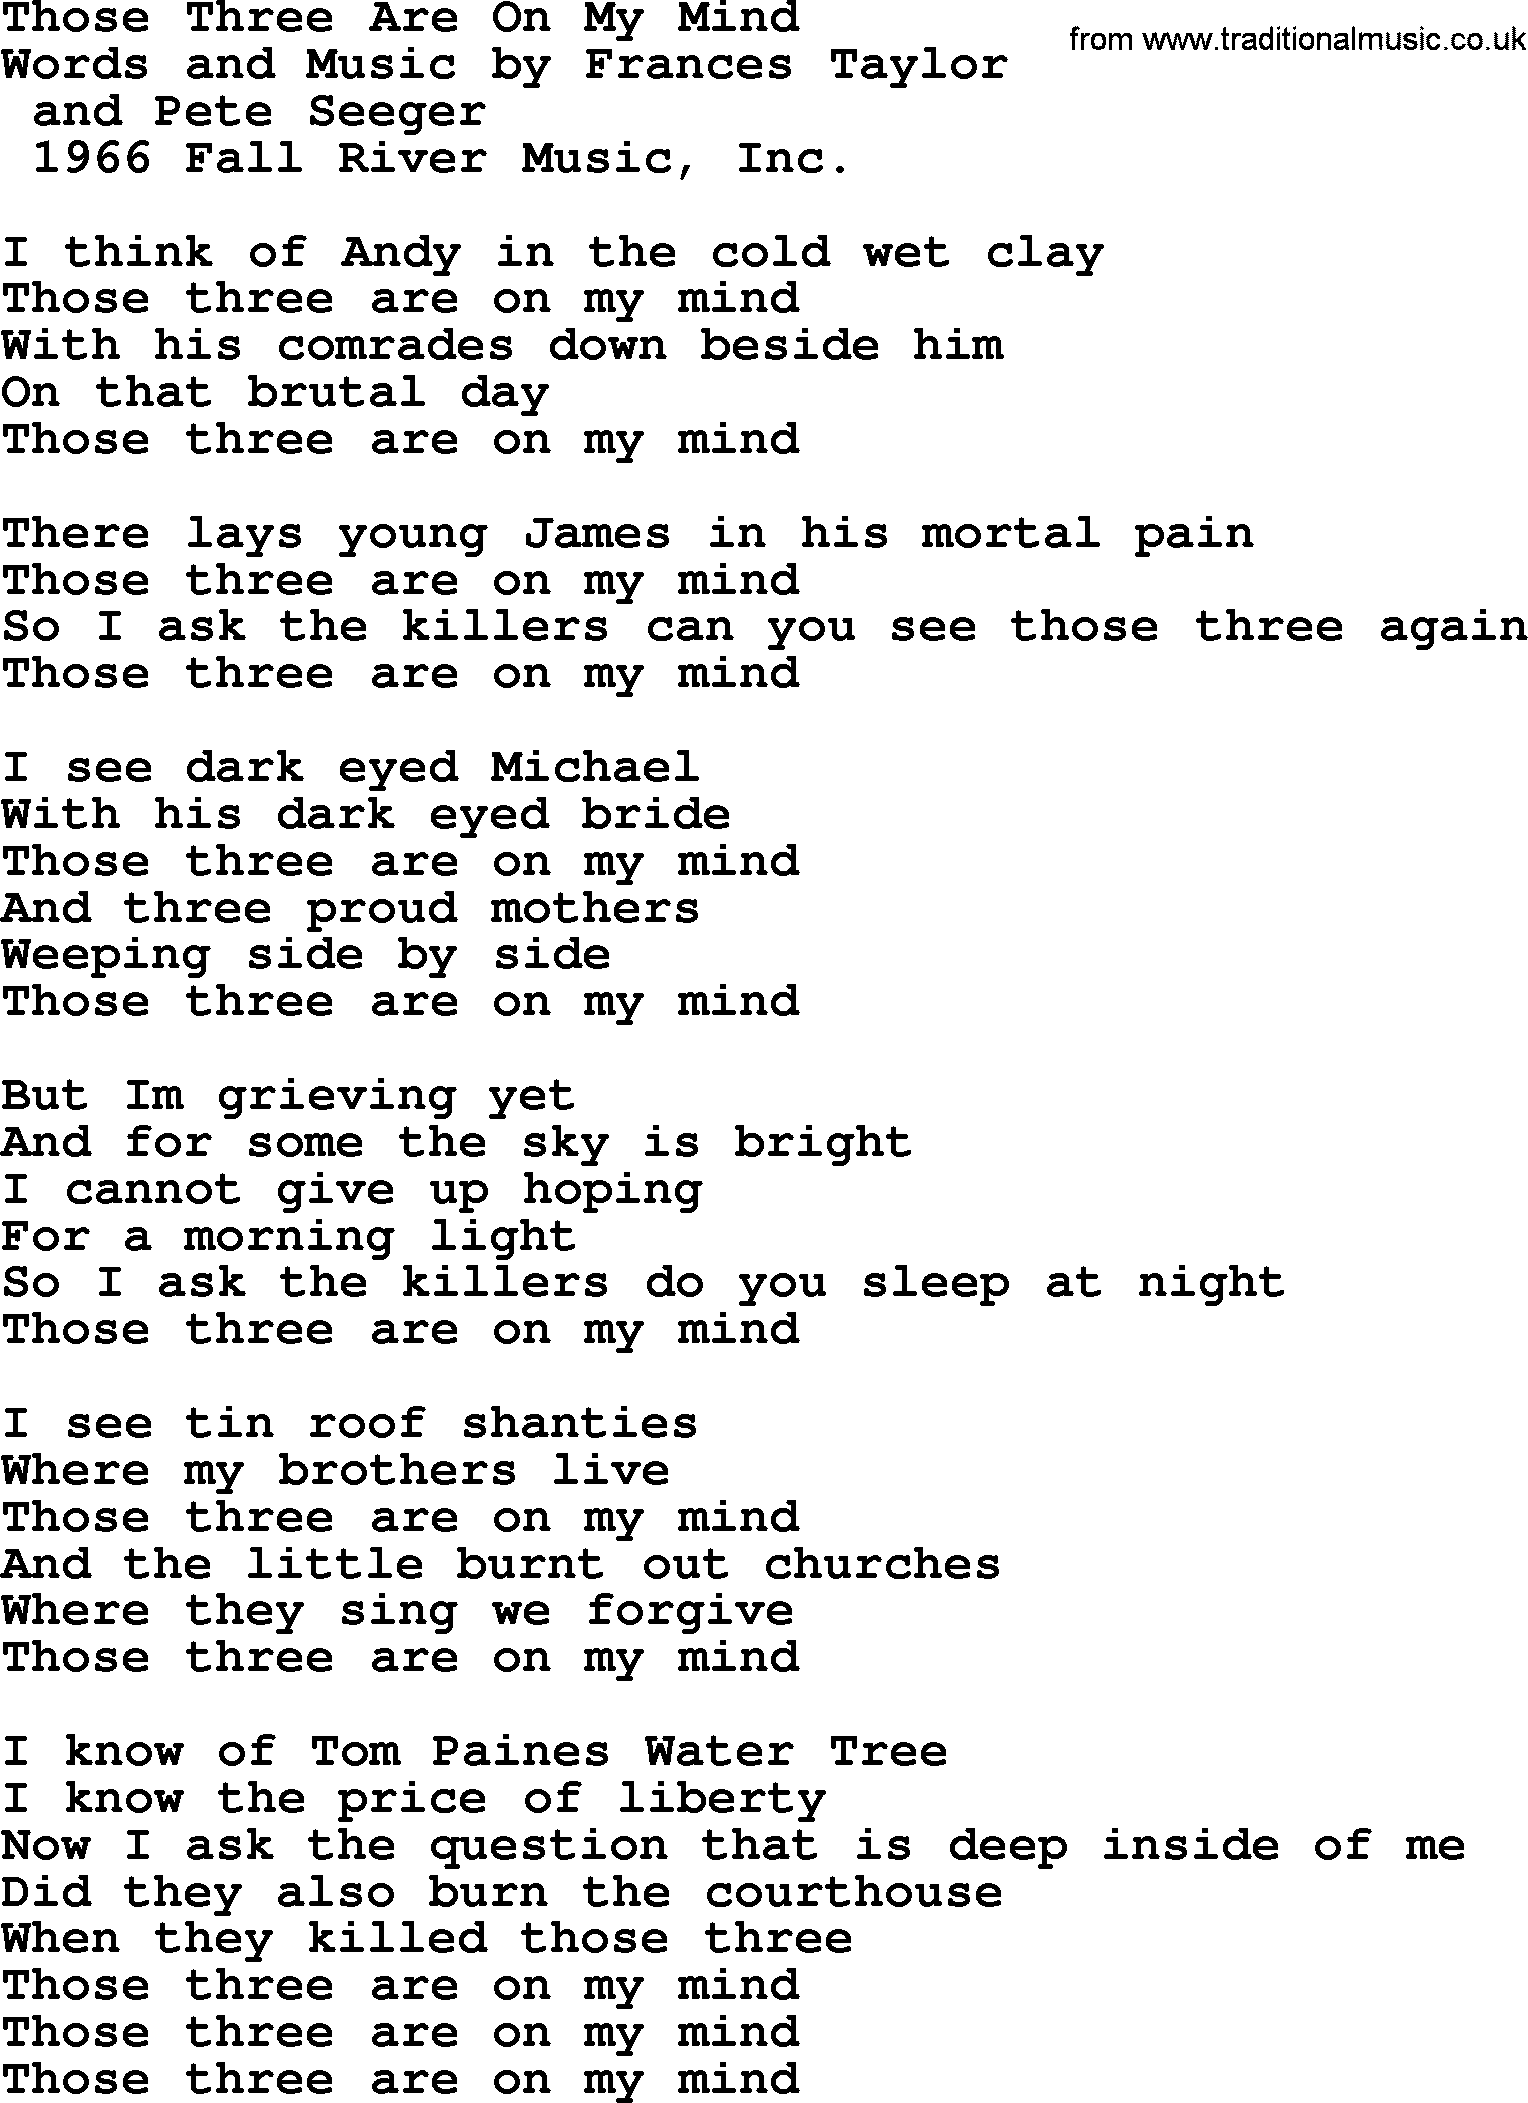 Pete Seeger song Those Three Are On My Mind-Pete-Seeger.txt lyrics